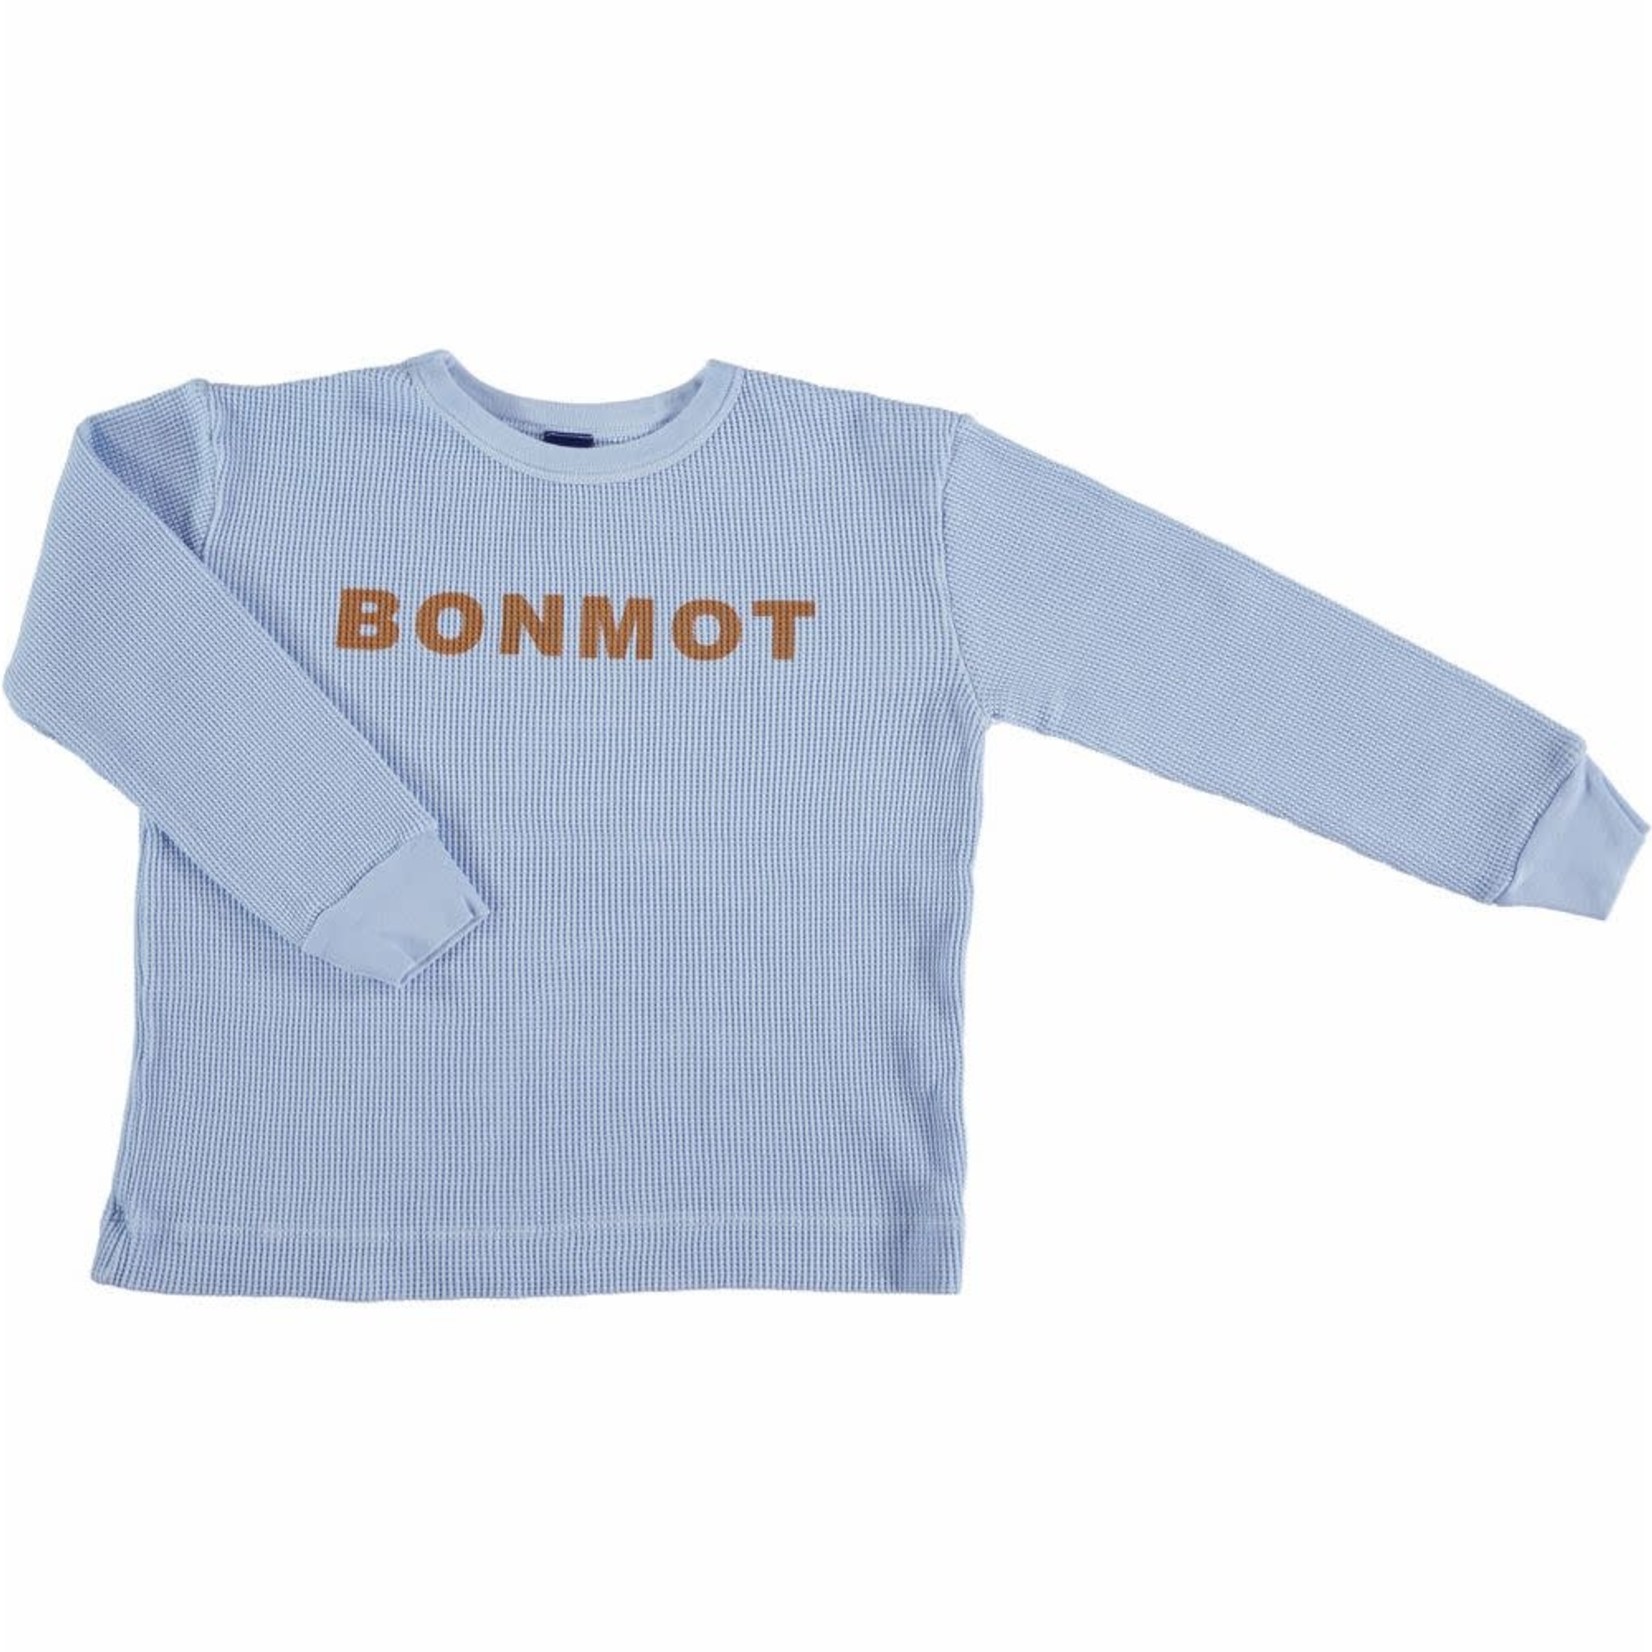 BONMOT BONMOT  t-shirt long sleeve